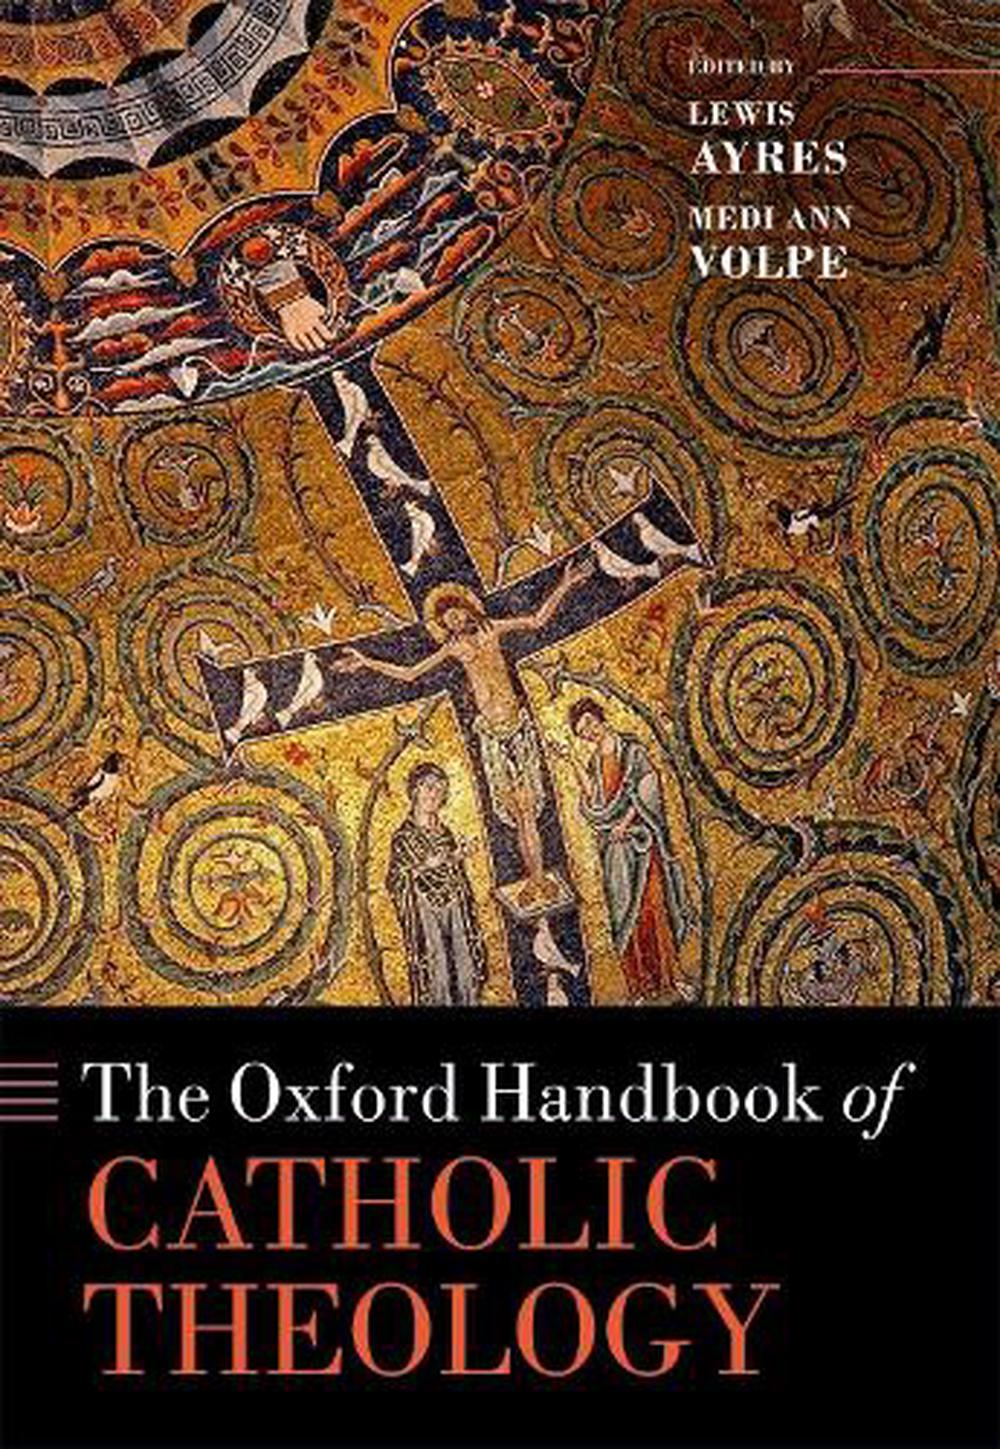 catholic theology thesis topics